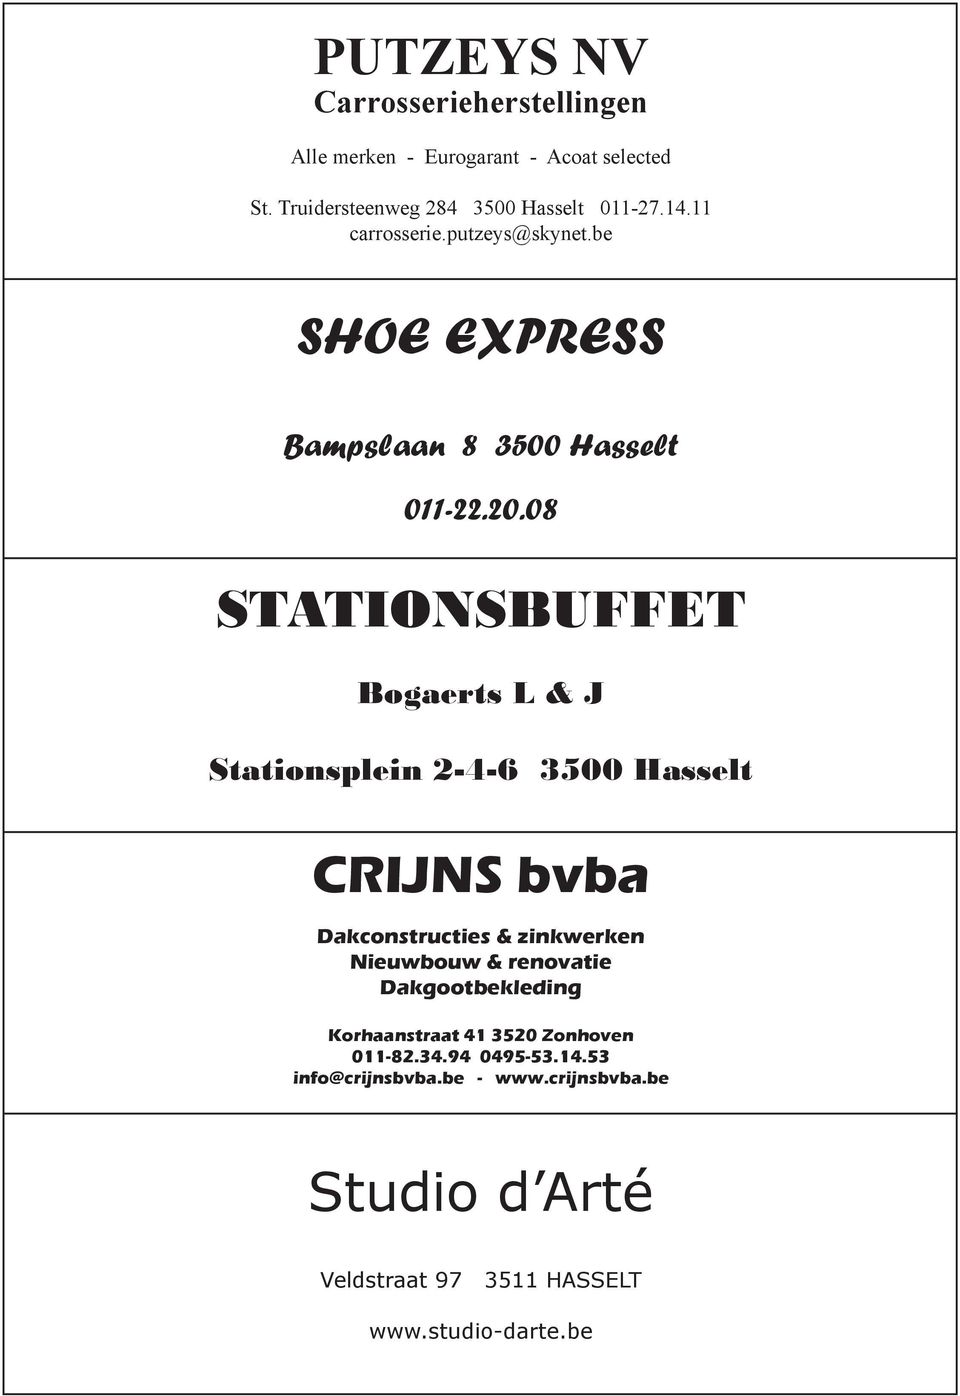 08 STATIONSBUFFET Bogaerts L & J Stationsplein 2-4-6 CRIJNS bvba Dakconstructies & zinkwerken Nieuwbouw & renovatie